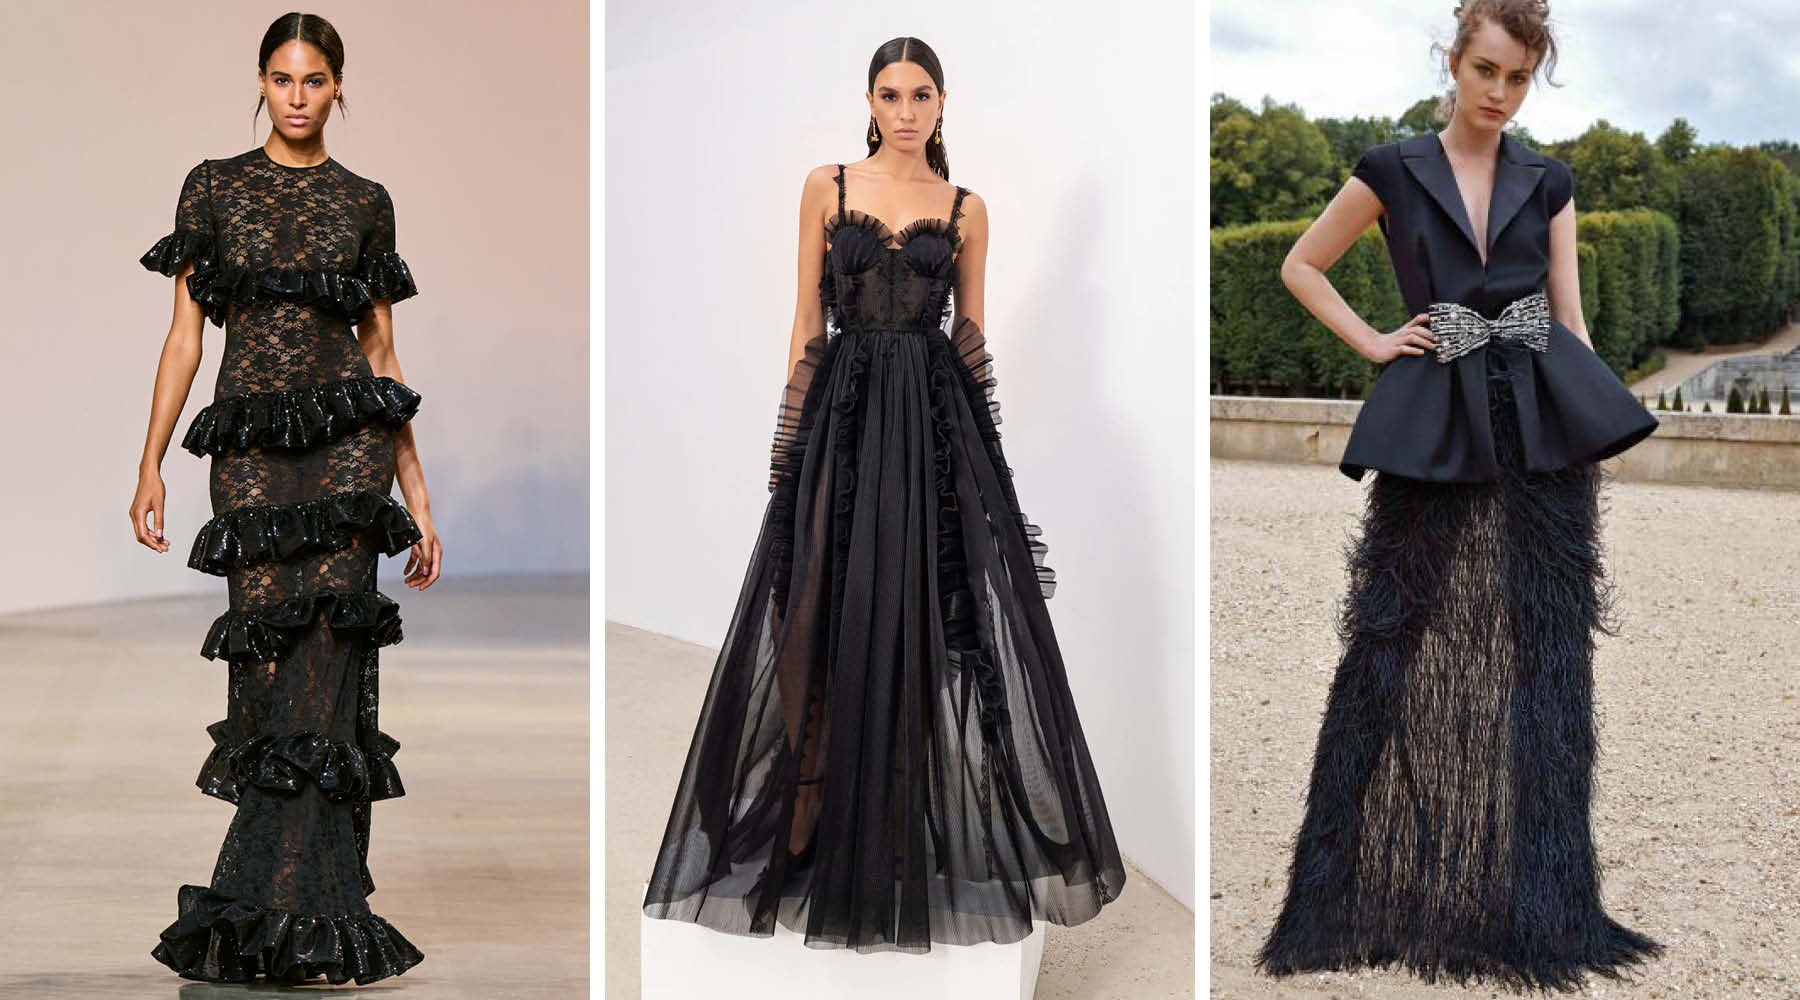 Gothic Black Lace Ball Gown Wedding Dress with Cape CLARINDA – ieie